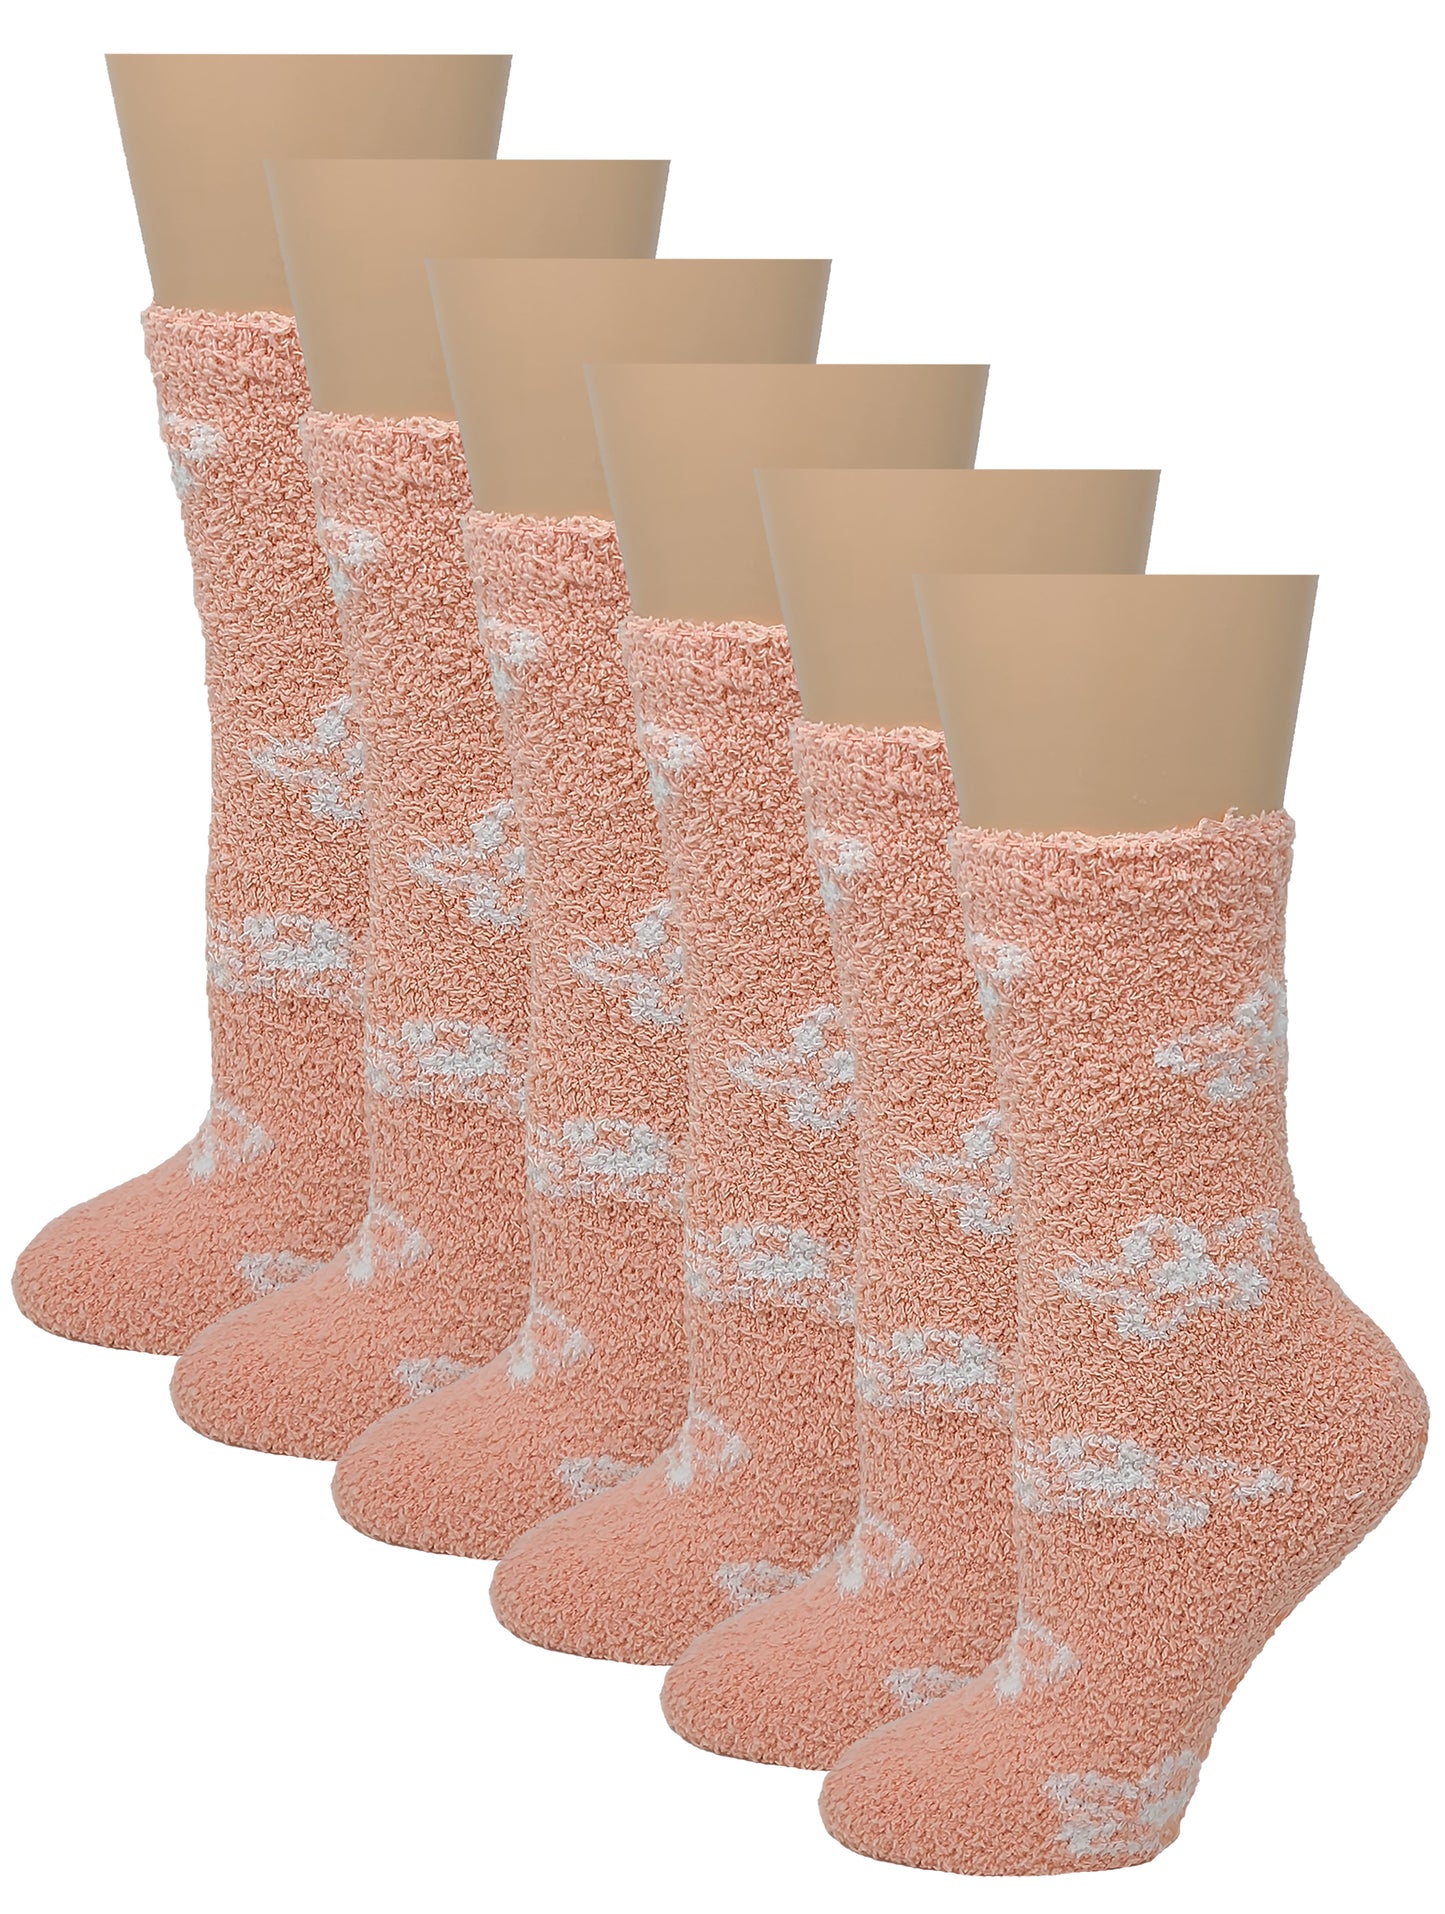 Non-slip Hospital Slipper Socks | Cozy Fuzzy Socks | Women (6 Pairs)